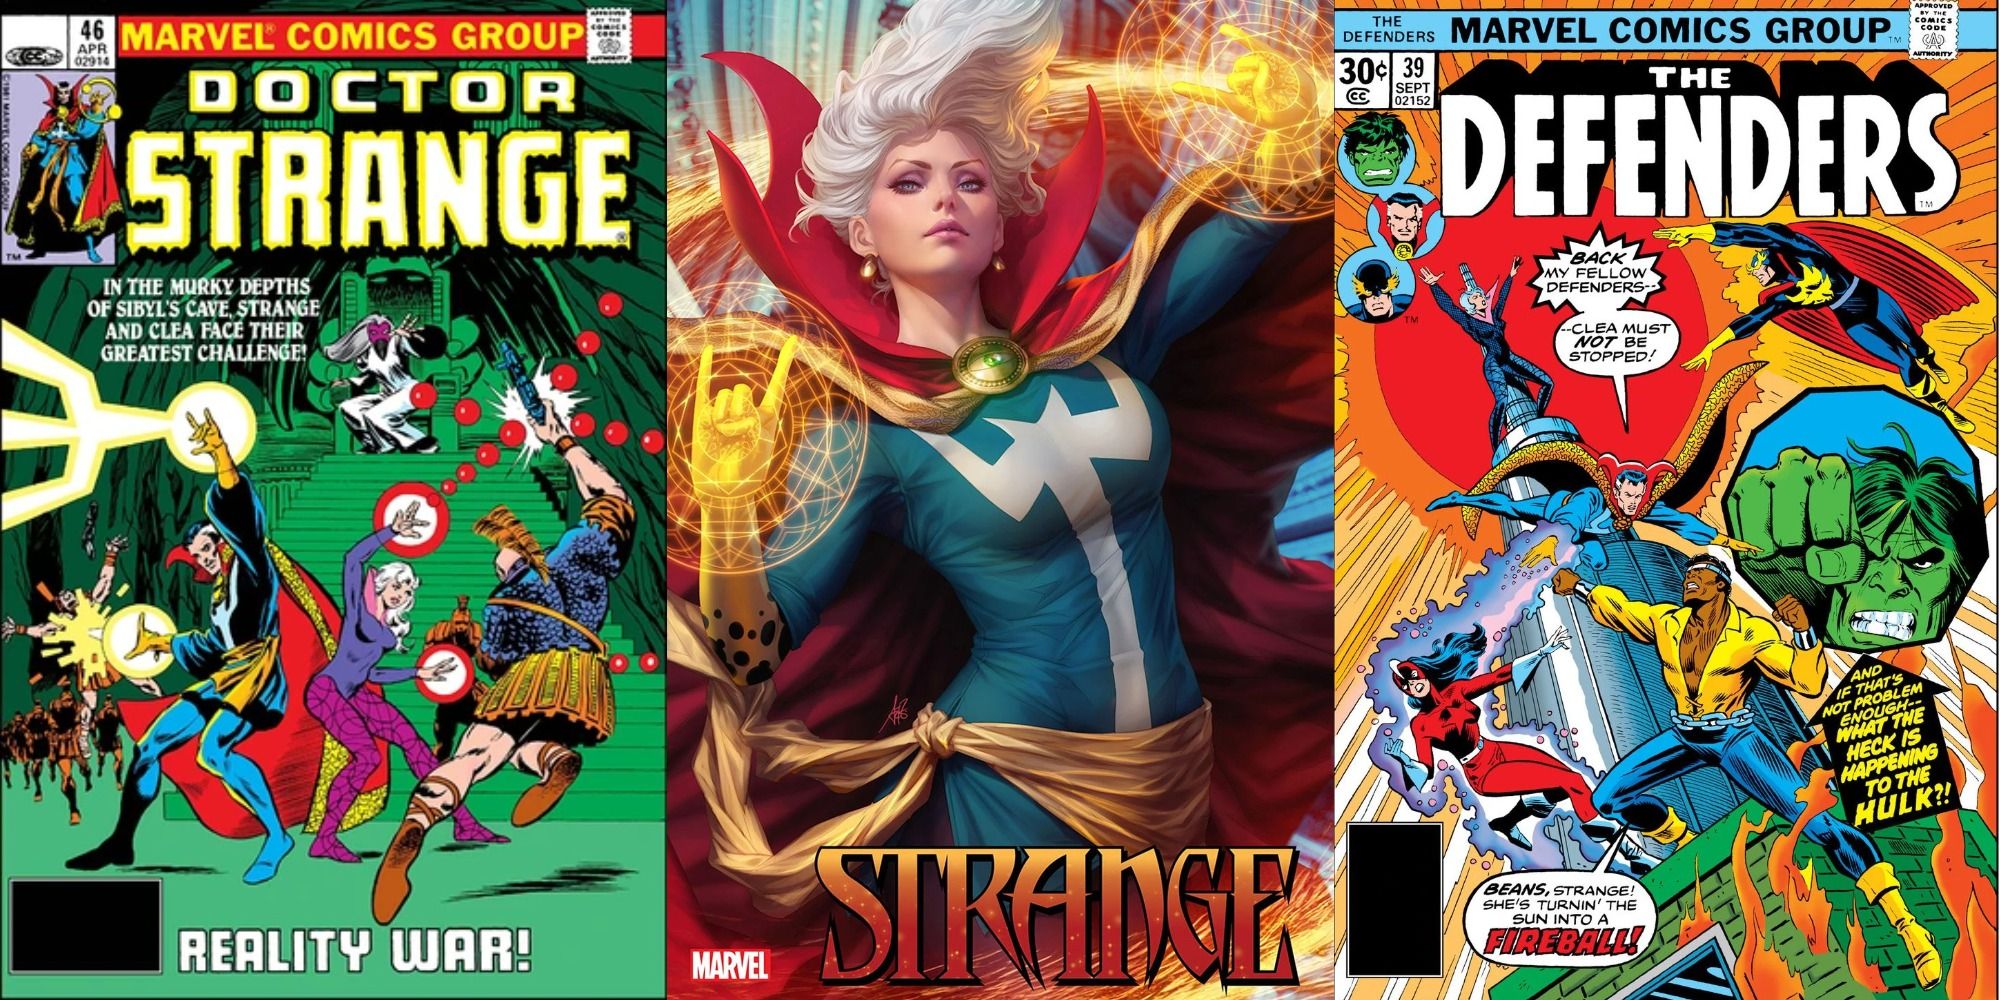 Split image of Doctor Strange 46, Strange 1, and Defenders 39 comic covers.